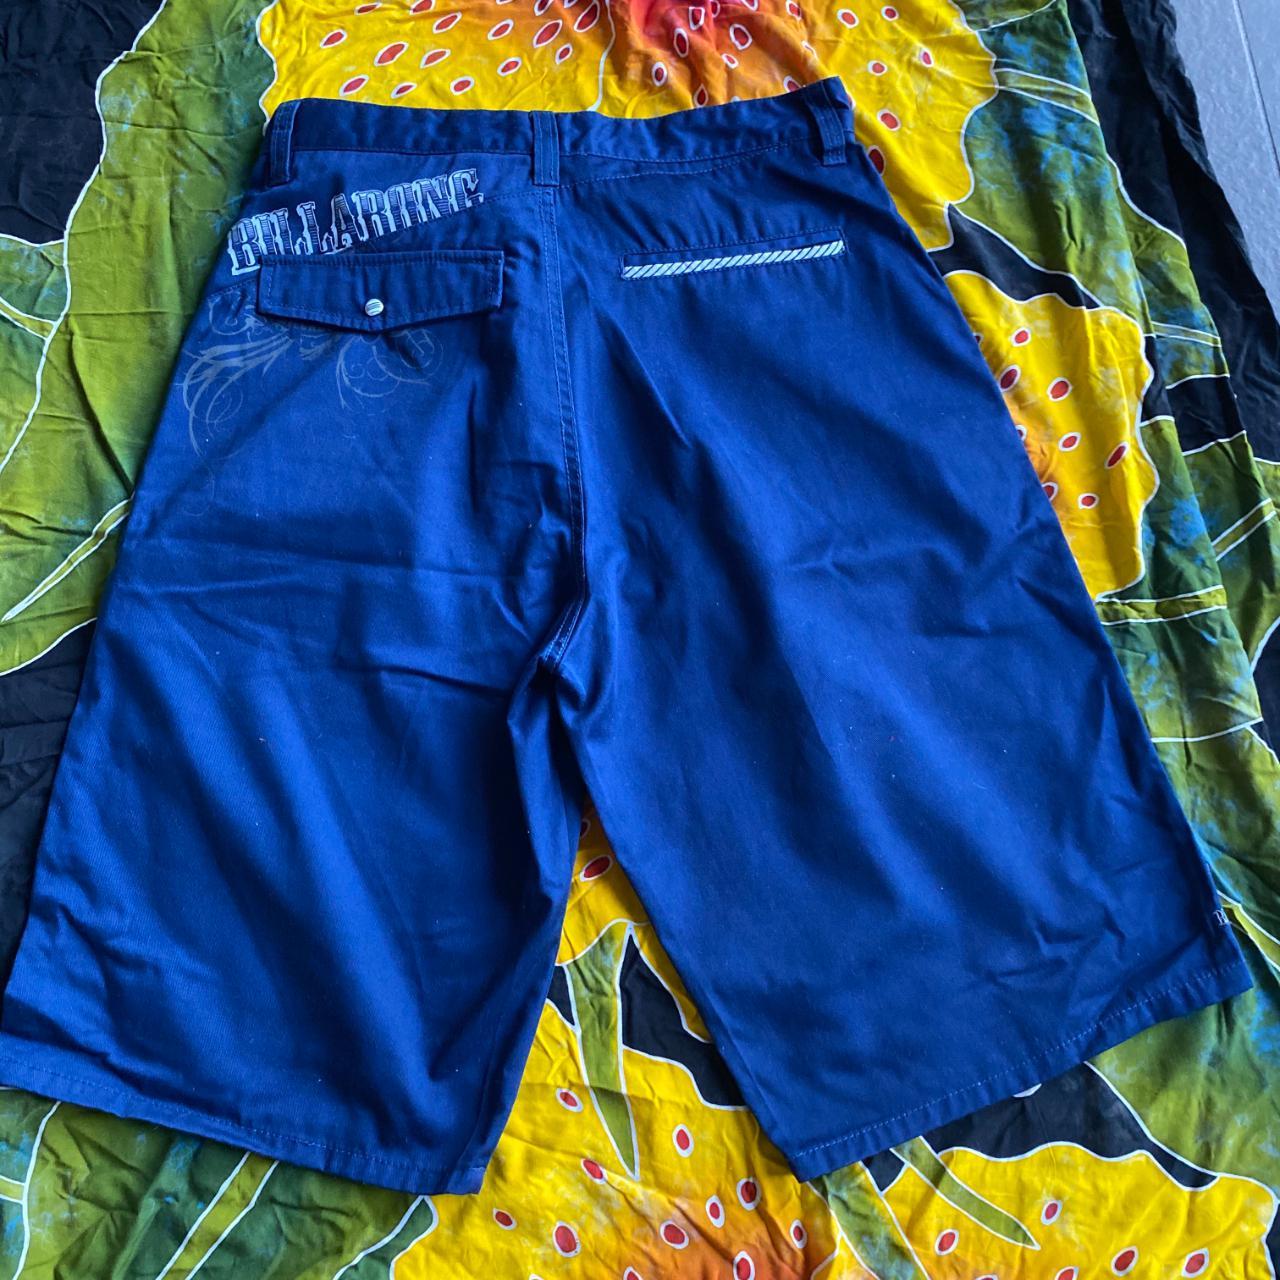 Billabong Men's Blue and Black Shorts | Depop